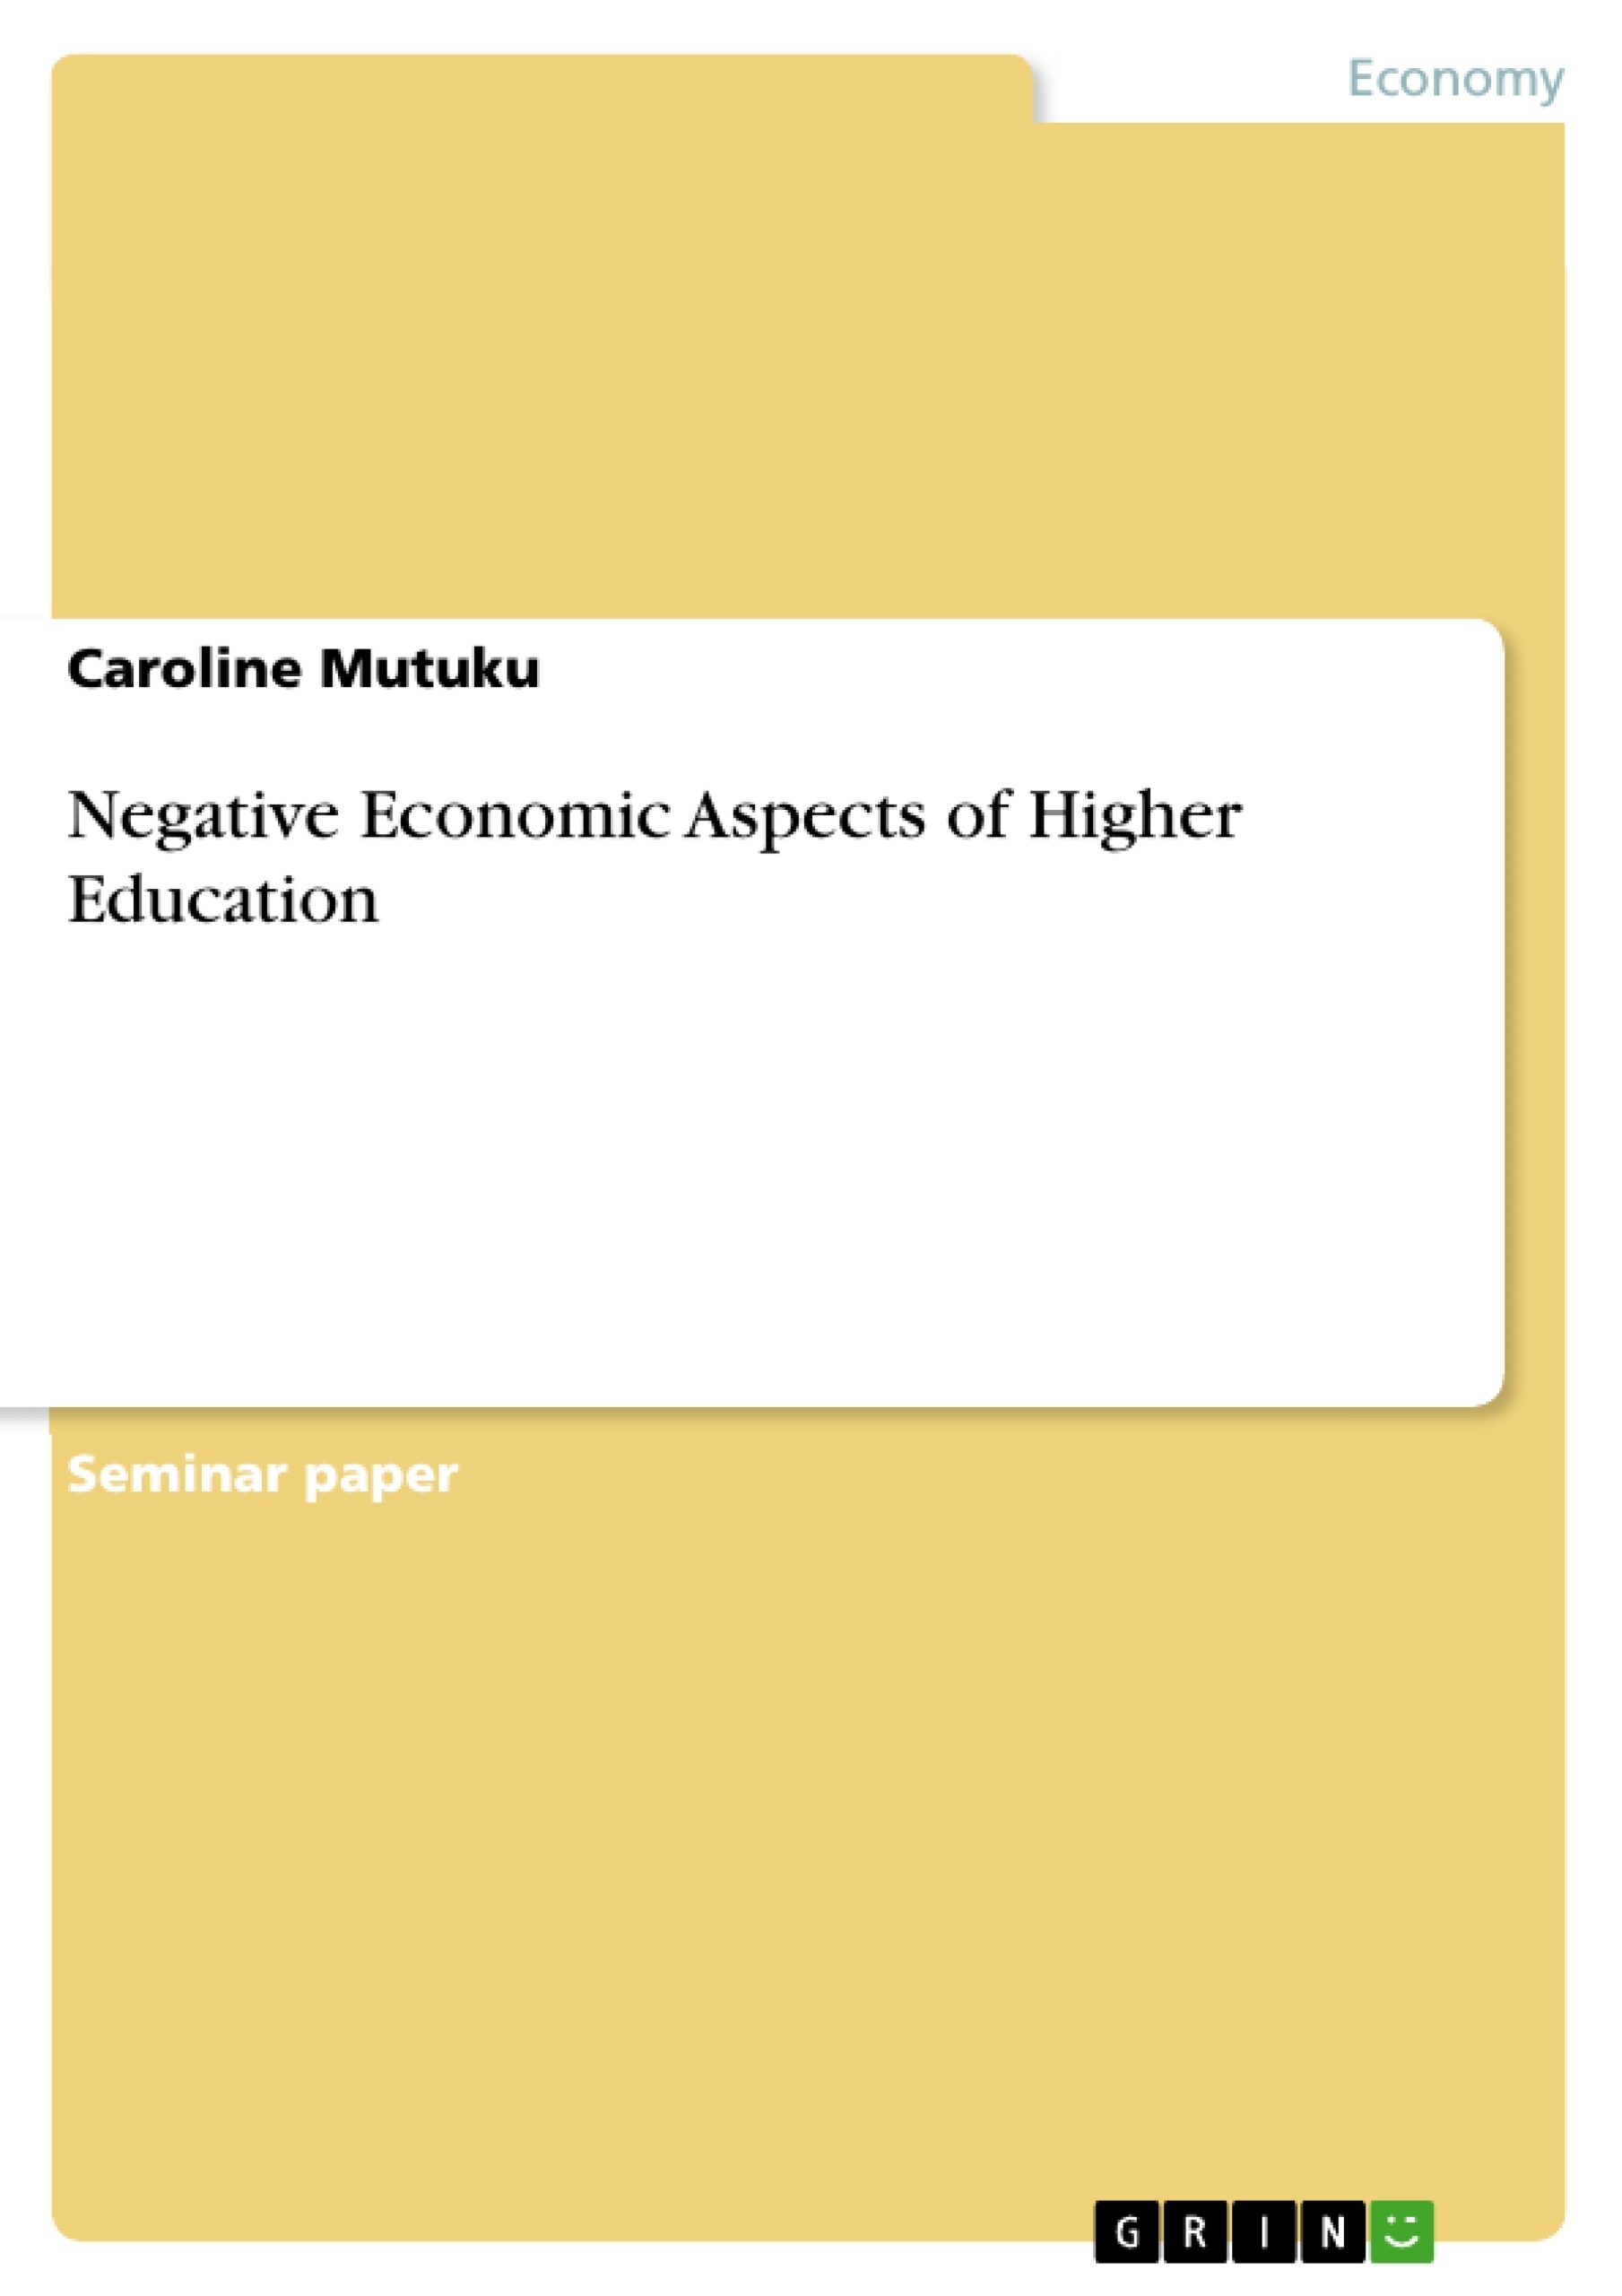 Title: Negative Economic Aspects of Higher Education